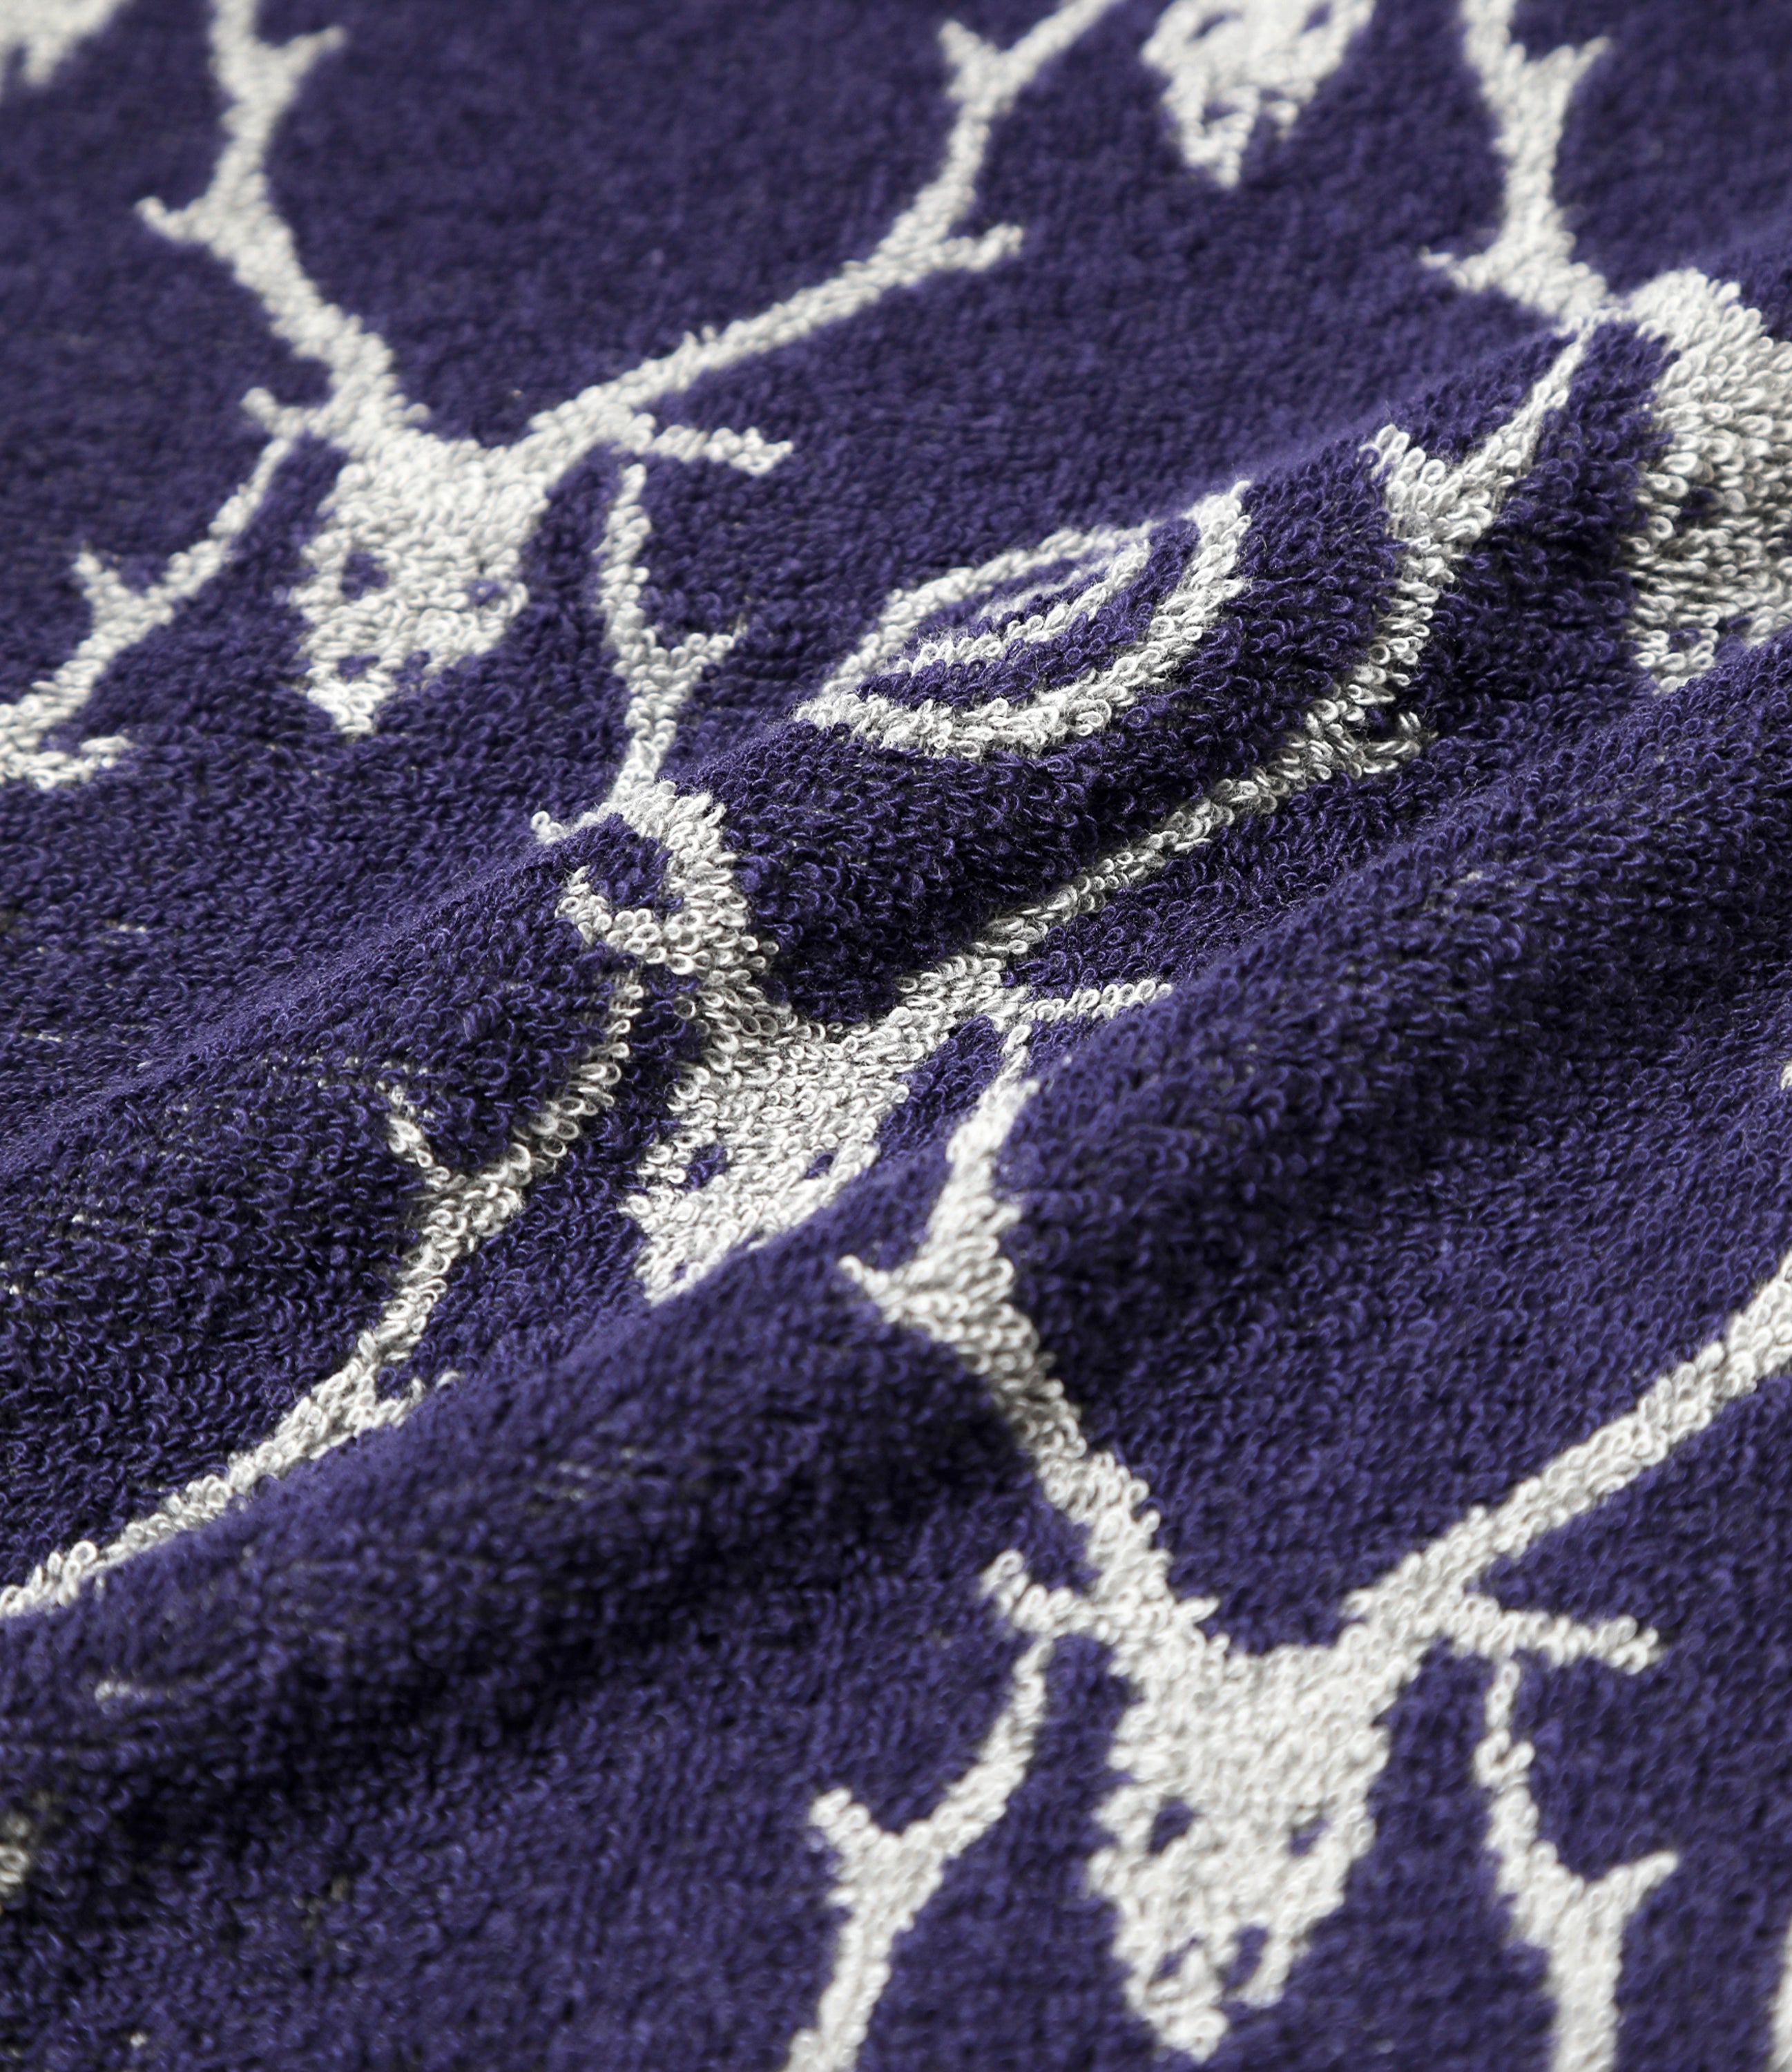 Wash Towel - Grey/Purple - Cotton Pile Jq/Skull & Target